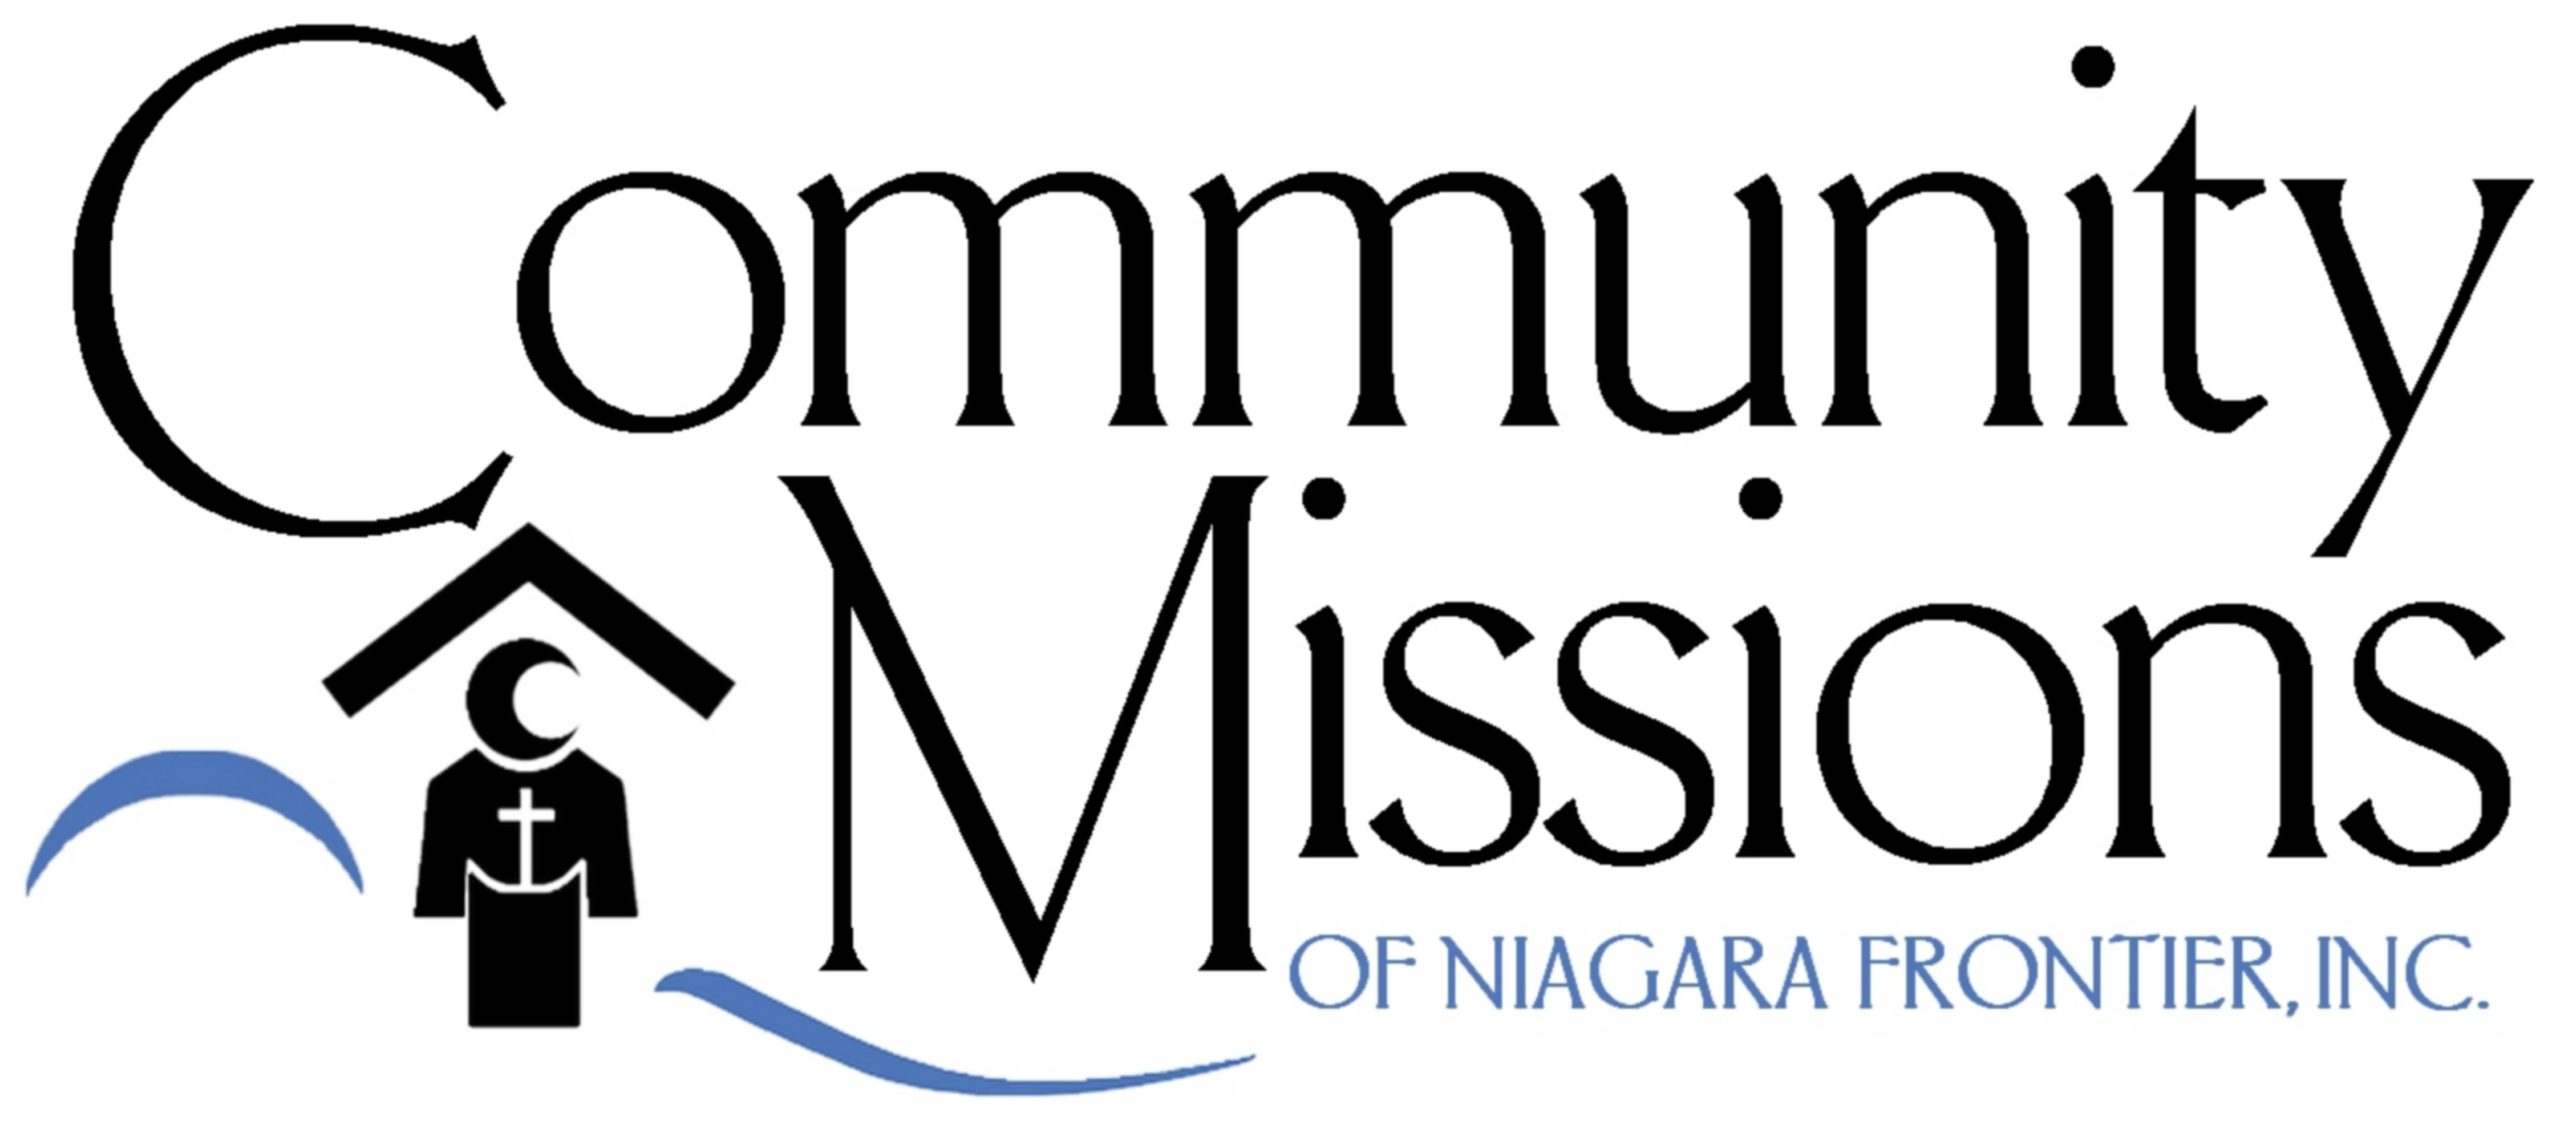 Community Missions of Niagara Frontier, Inc. Logo